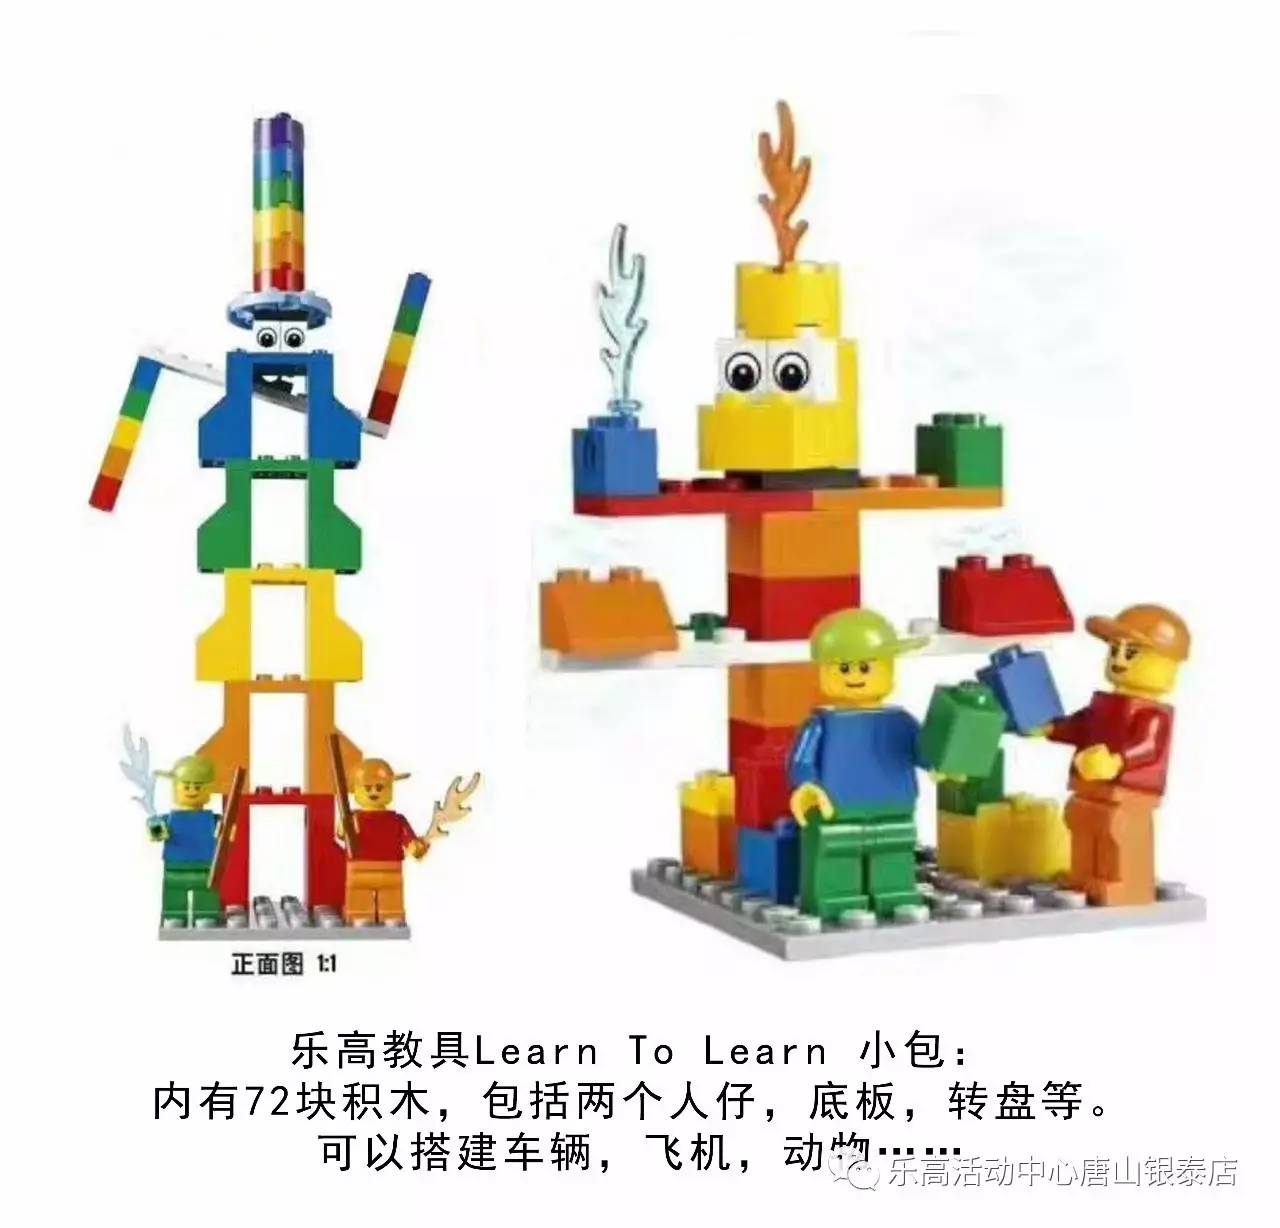 LEGO（乐高）有哪些经典款产品？ - 知乎